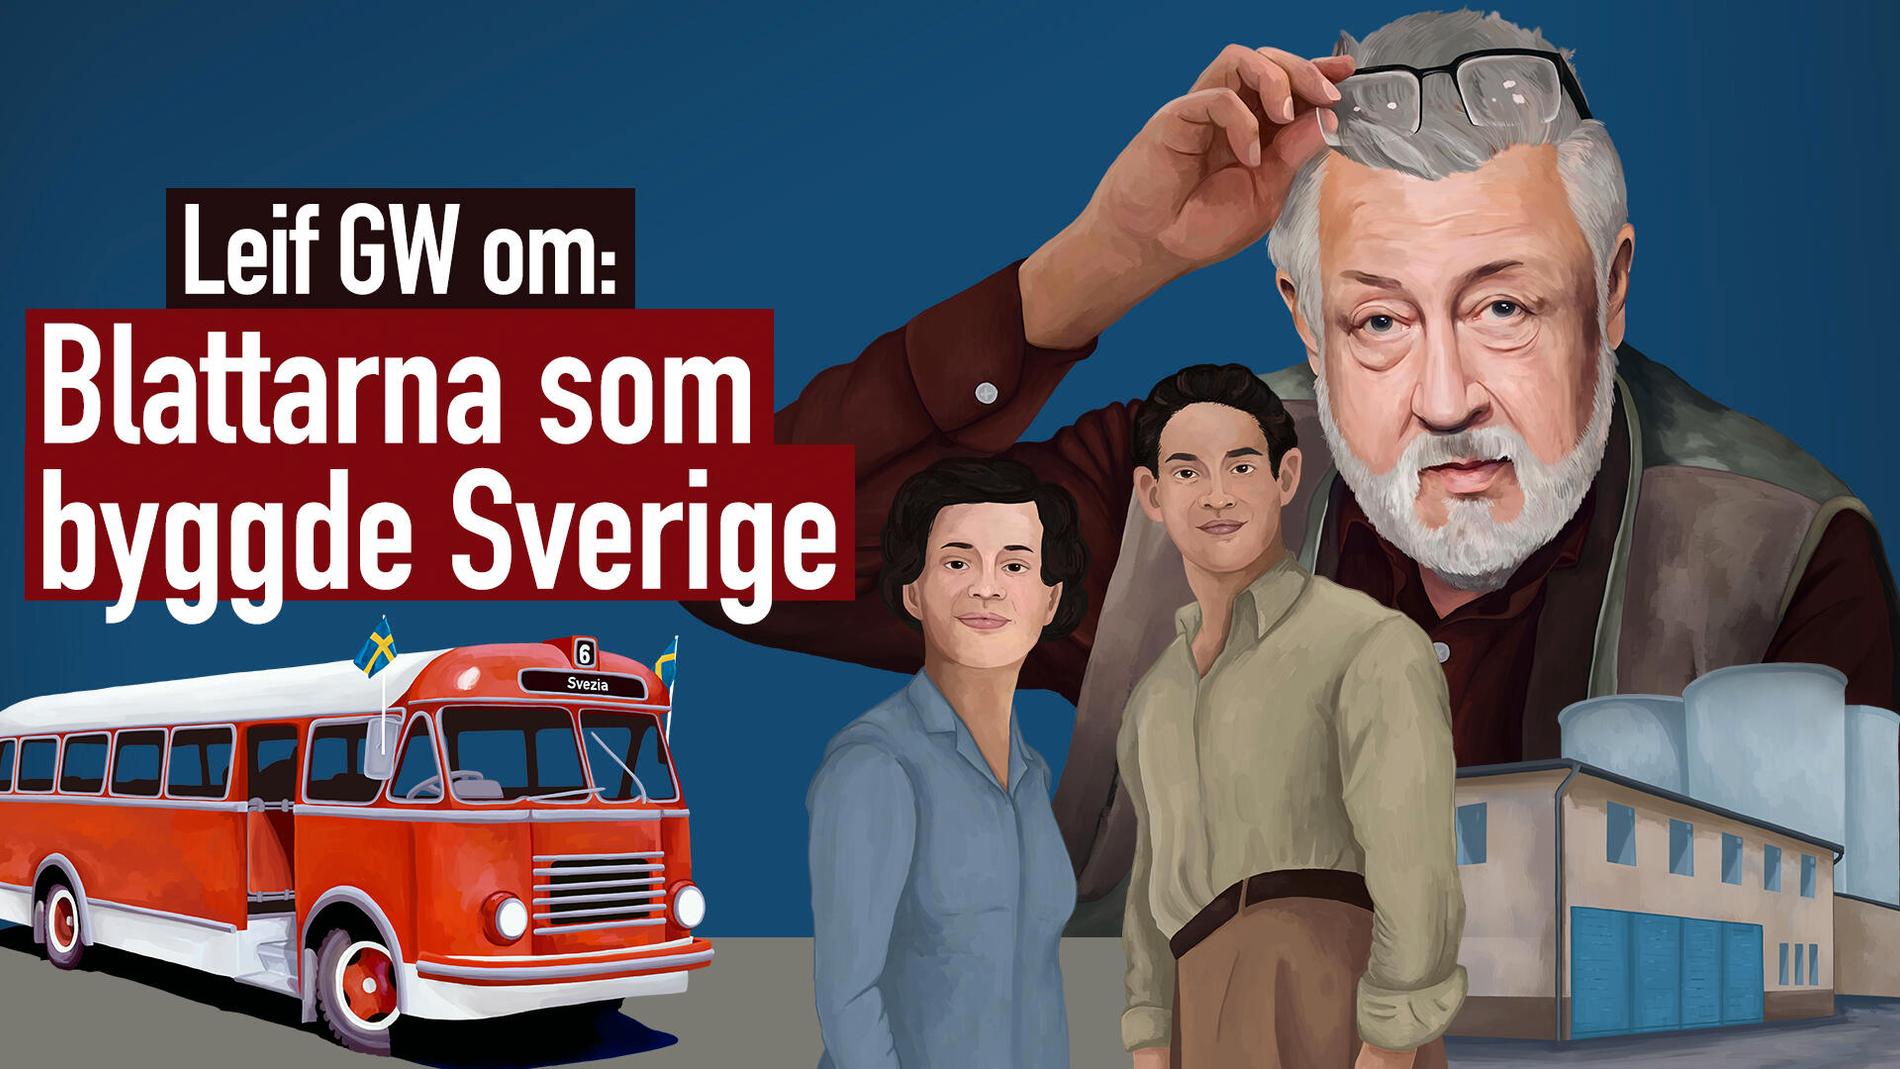 ”Blattarna som byggde Sverige”.